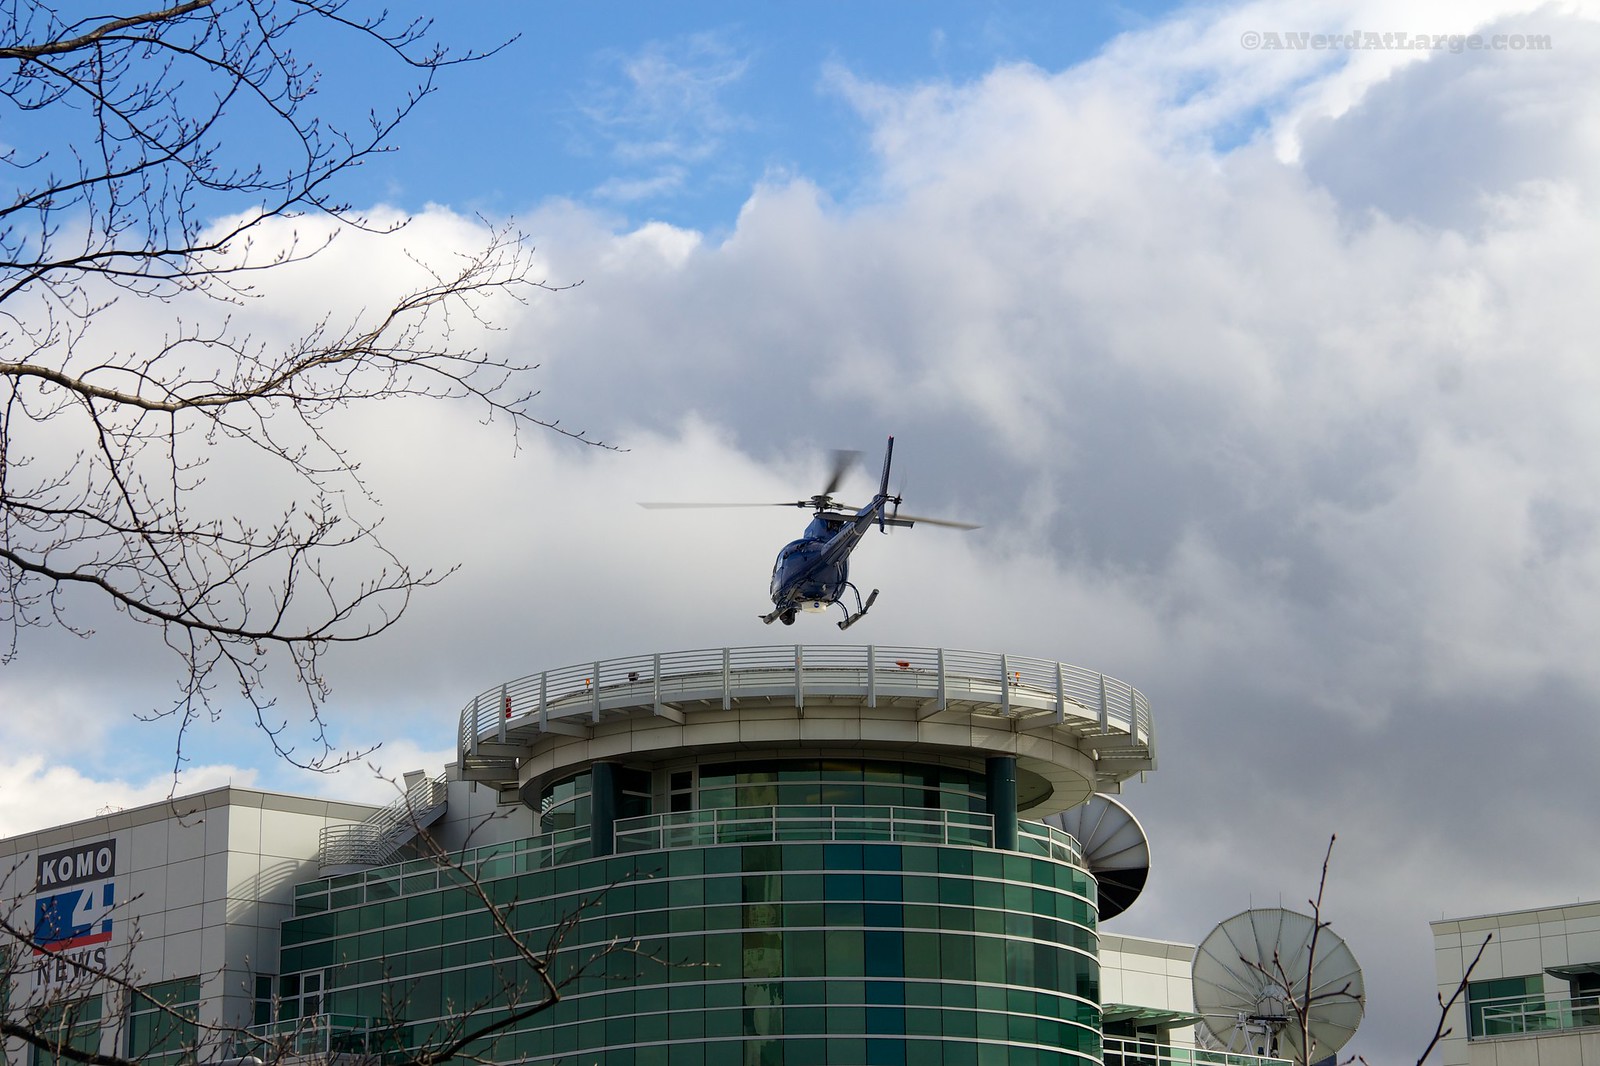 KOMO News Helicopter